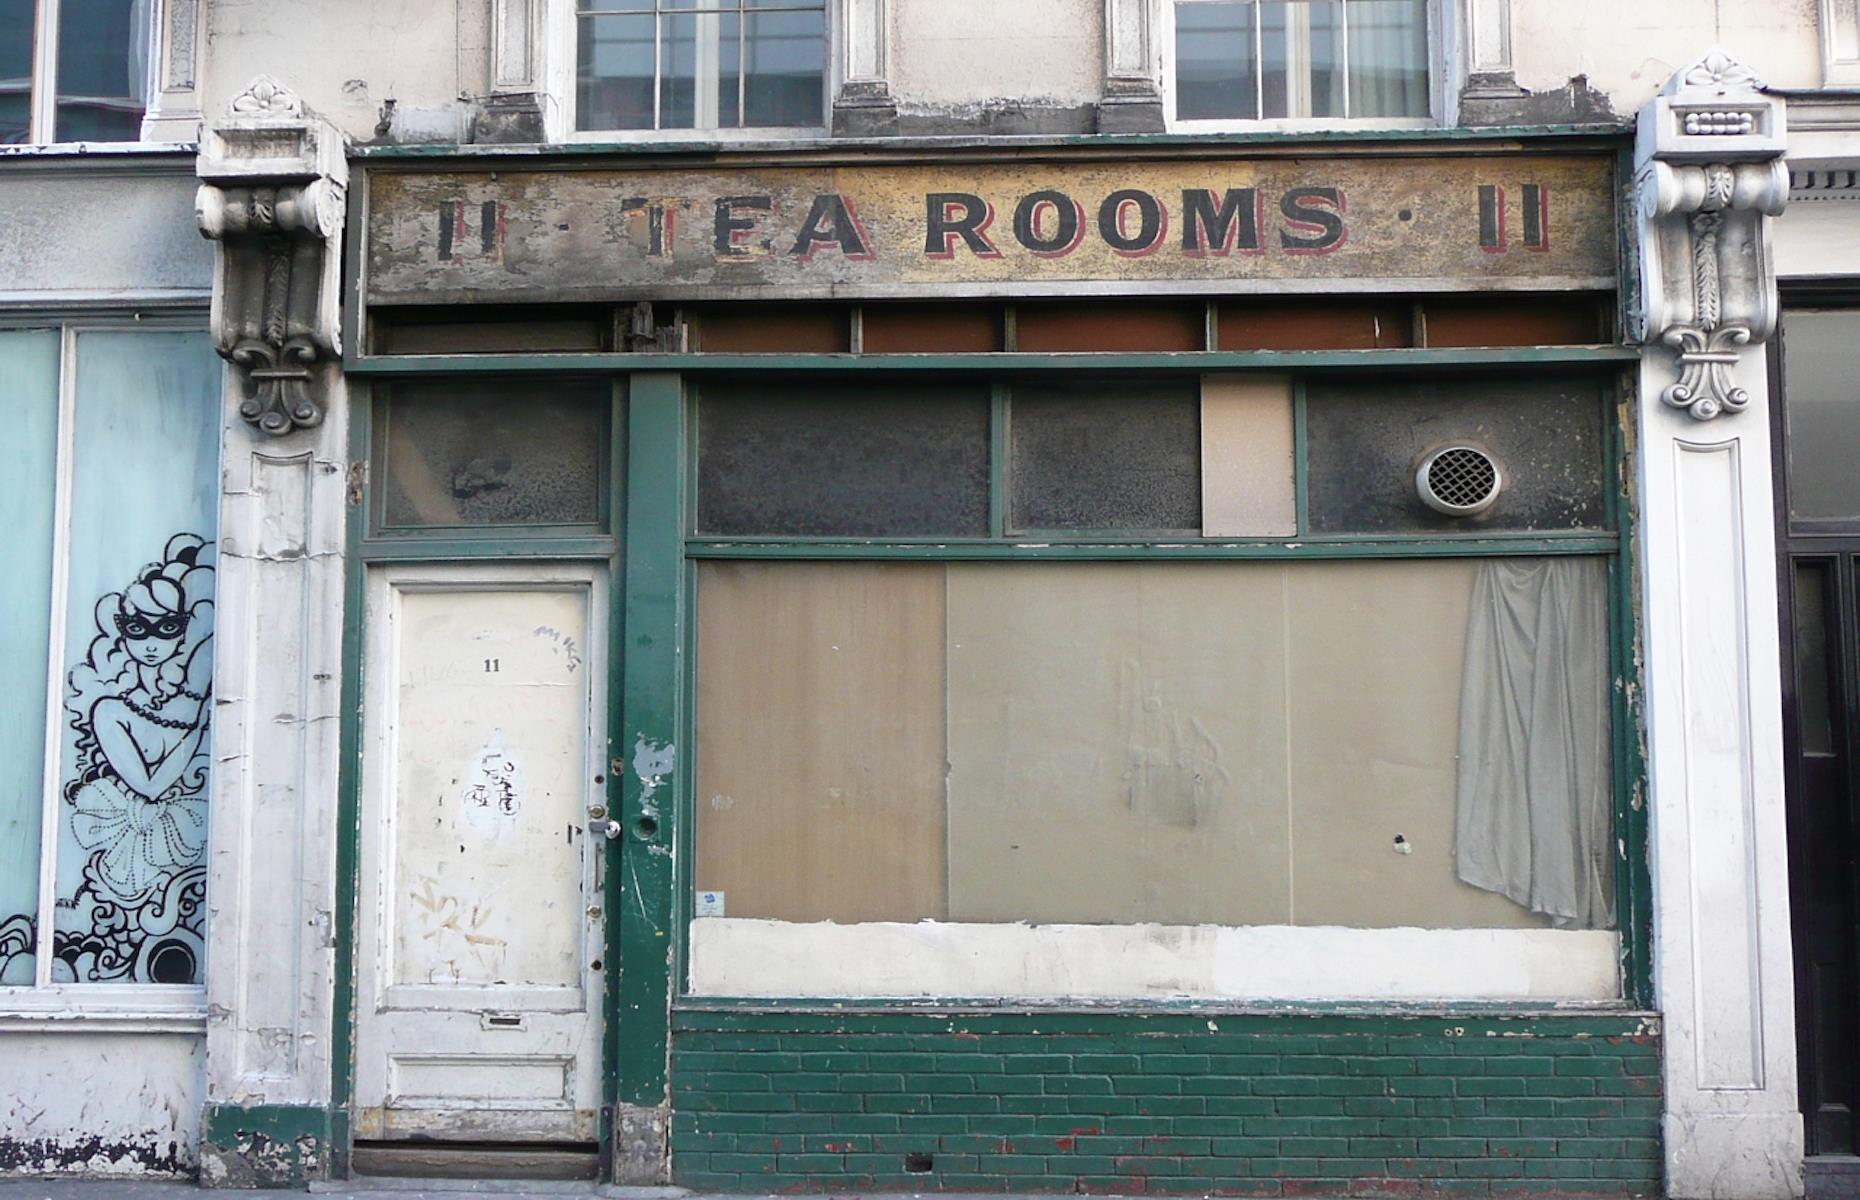 Tea Rooms café, London, England